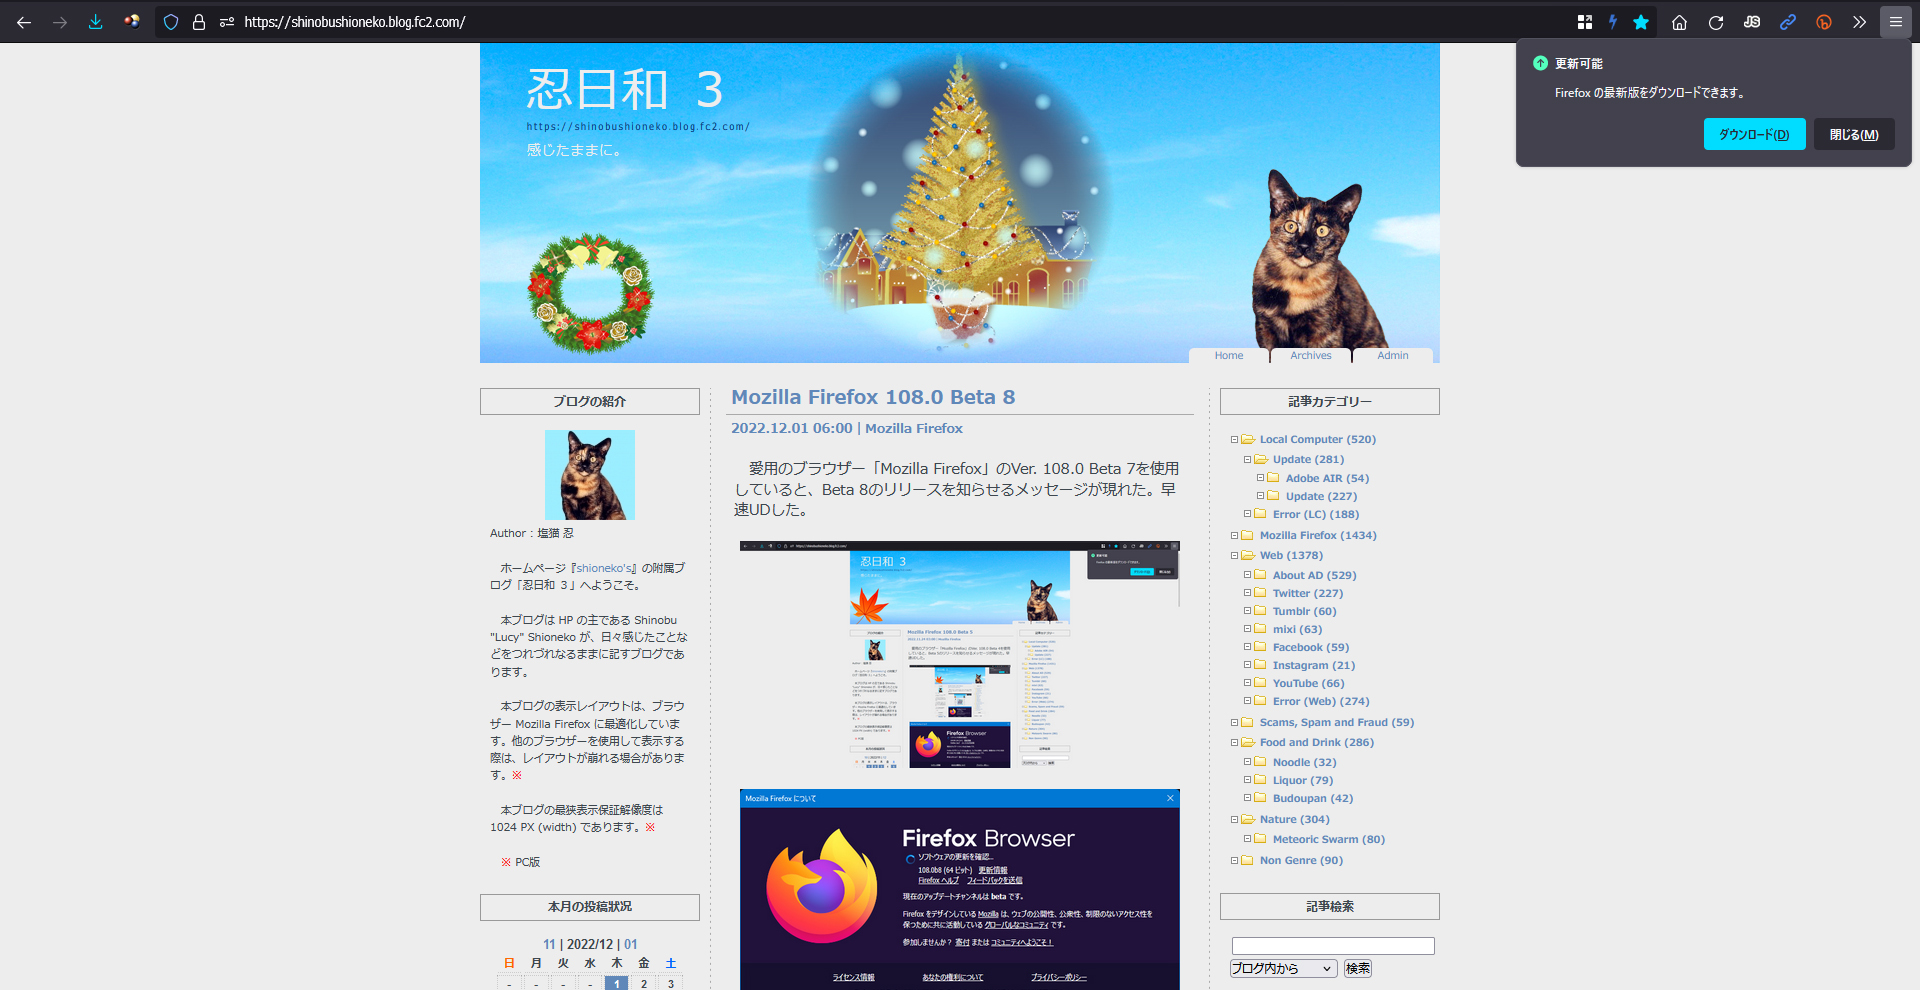 Mozilla Firefox 108.0 Beta 9